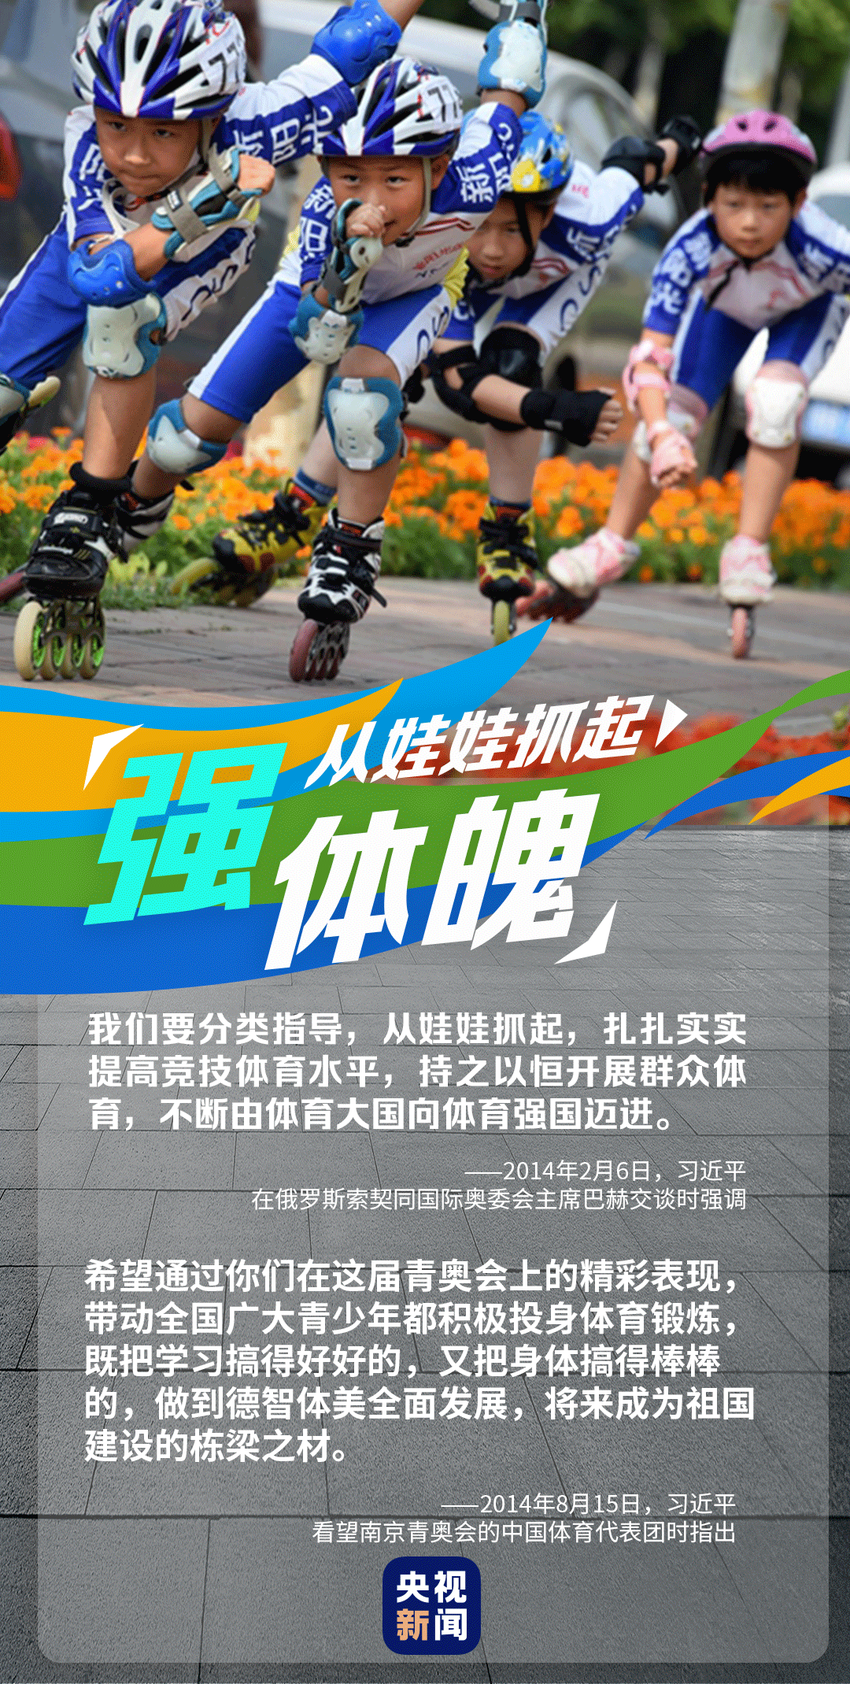 Hari Olahraga Nasional, Xi Jinping Serukan Masyarakat Rajin Berolahraga demi Rajin Bekerja_fororder_kc3